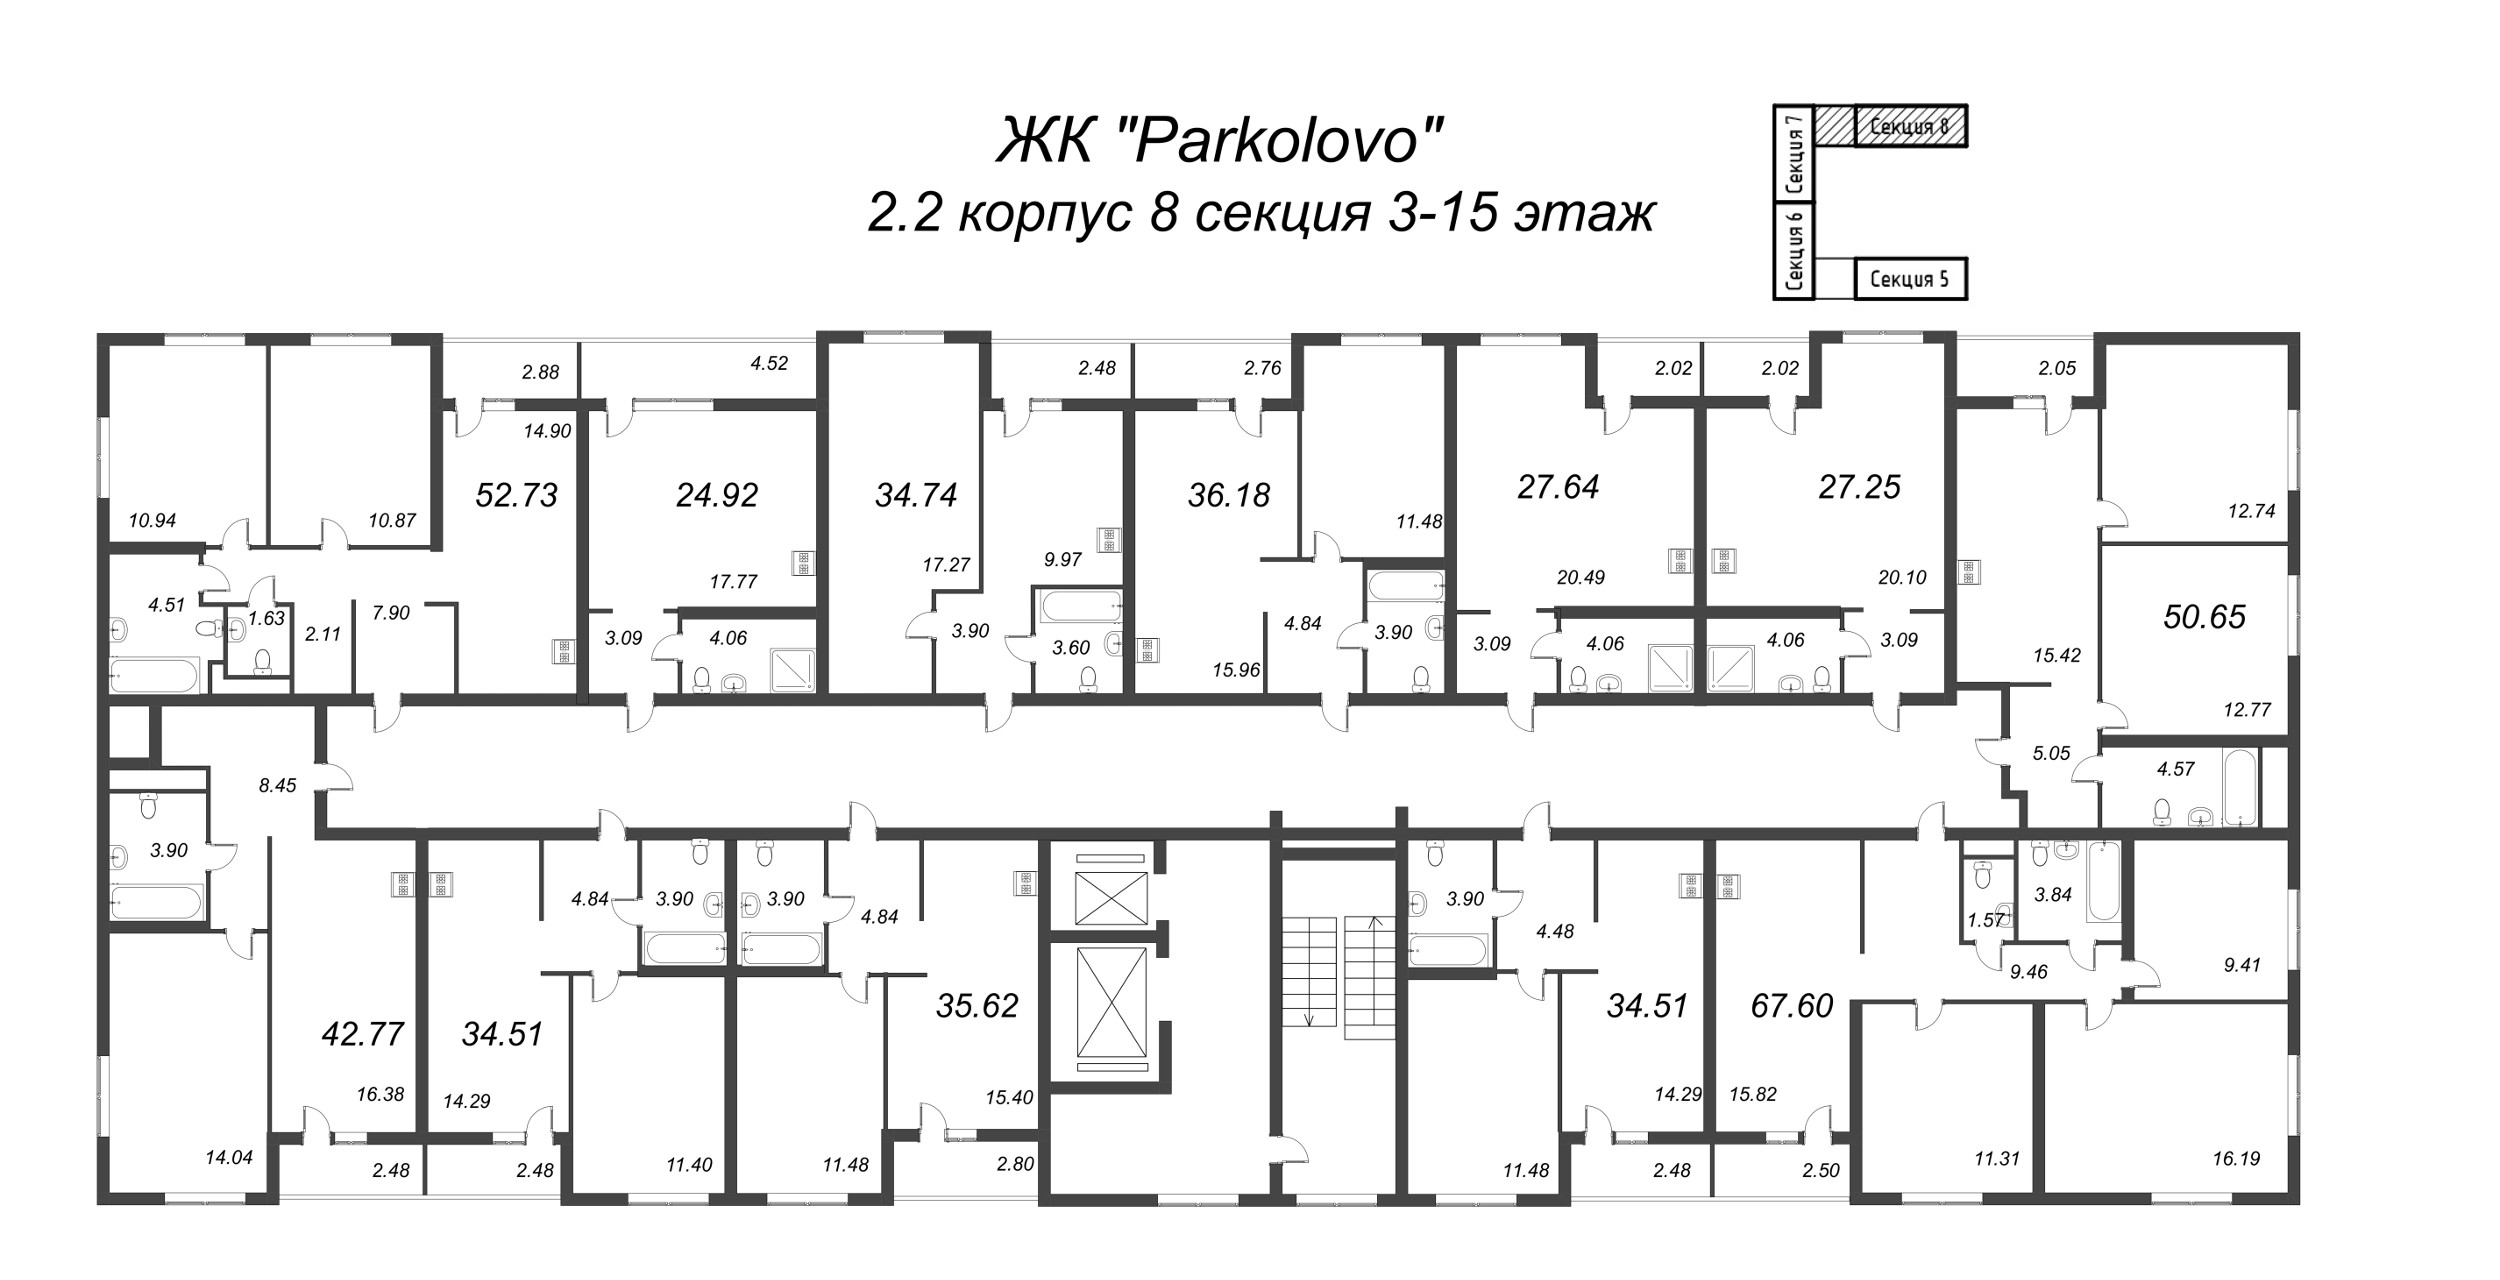 3-комнатная (Евро) квартира, 49.42 м² - планировка этажа